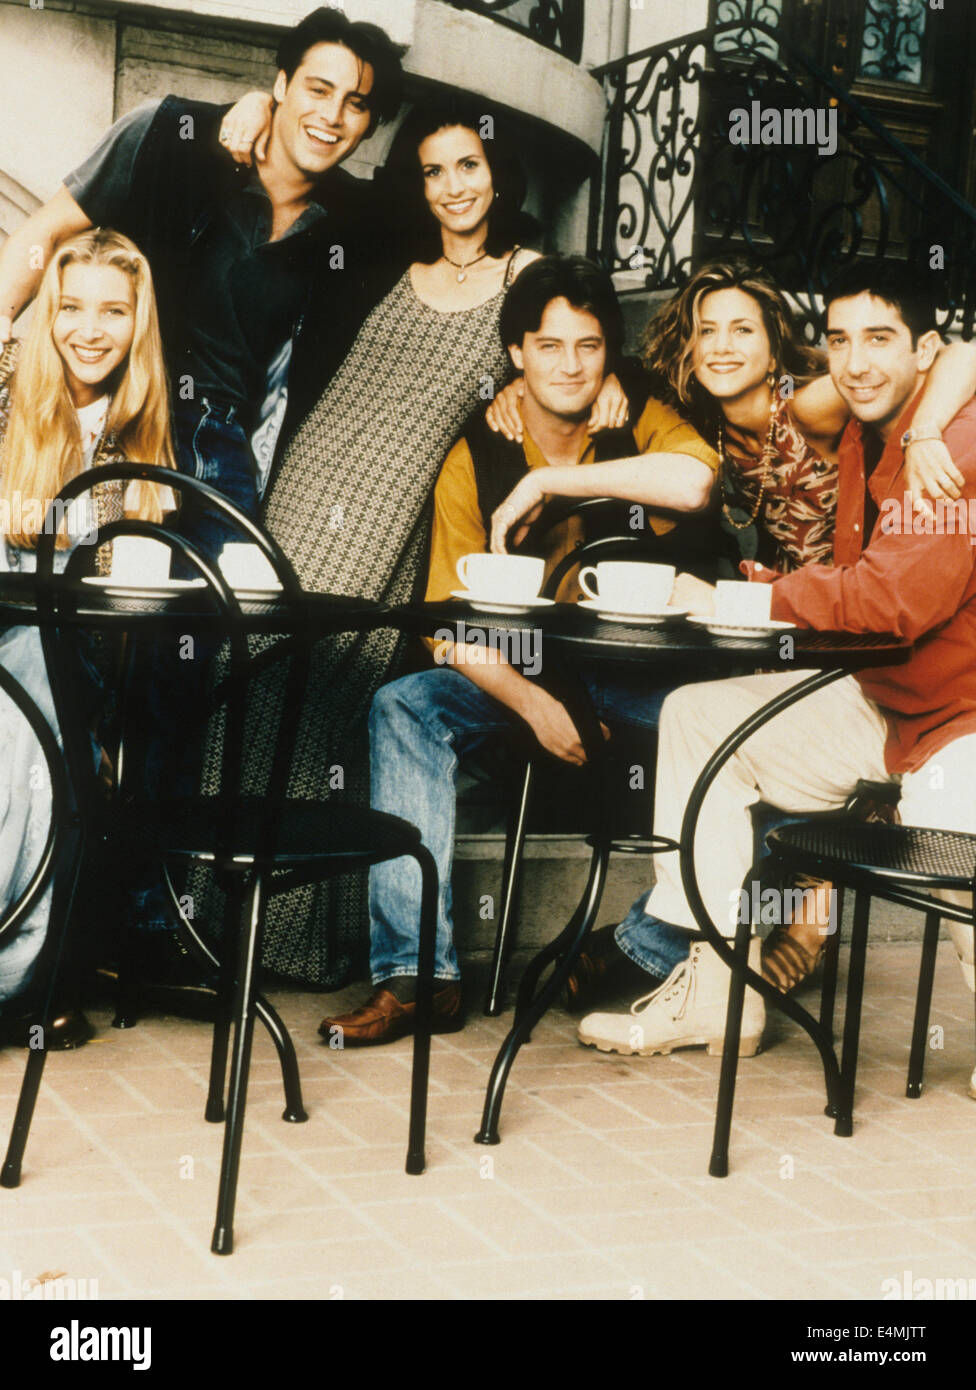  Friends: The Complete Series (25th Anniversary DVD) : Courteney  Cox, David Schwimmer, Jennifer Aniston, Lisa Kudrow, Matthew Perry, Matt  LeBlanc: Movies & TV